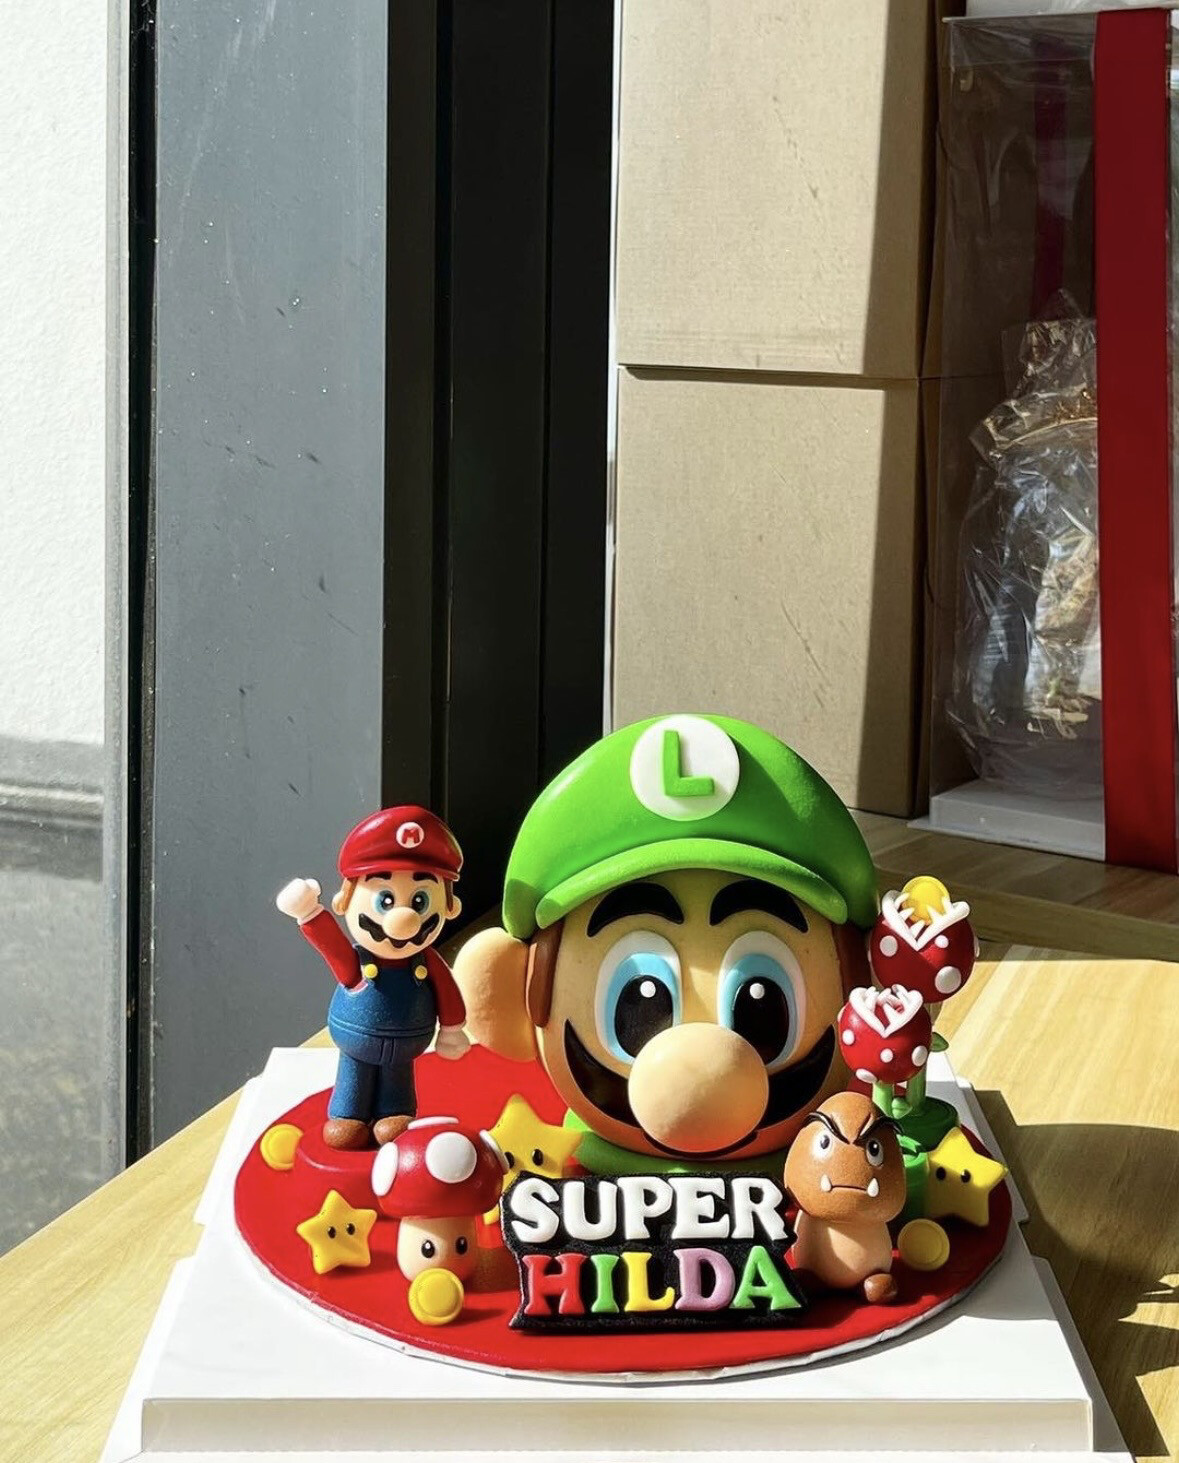 Super Mario Cake 3 Pinata / Piñata